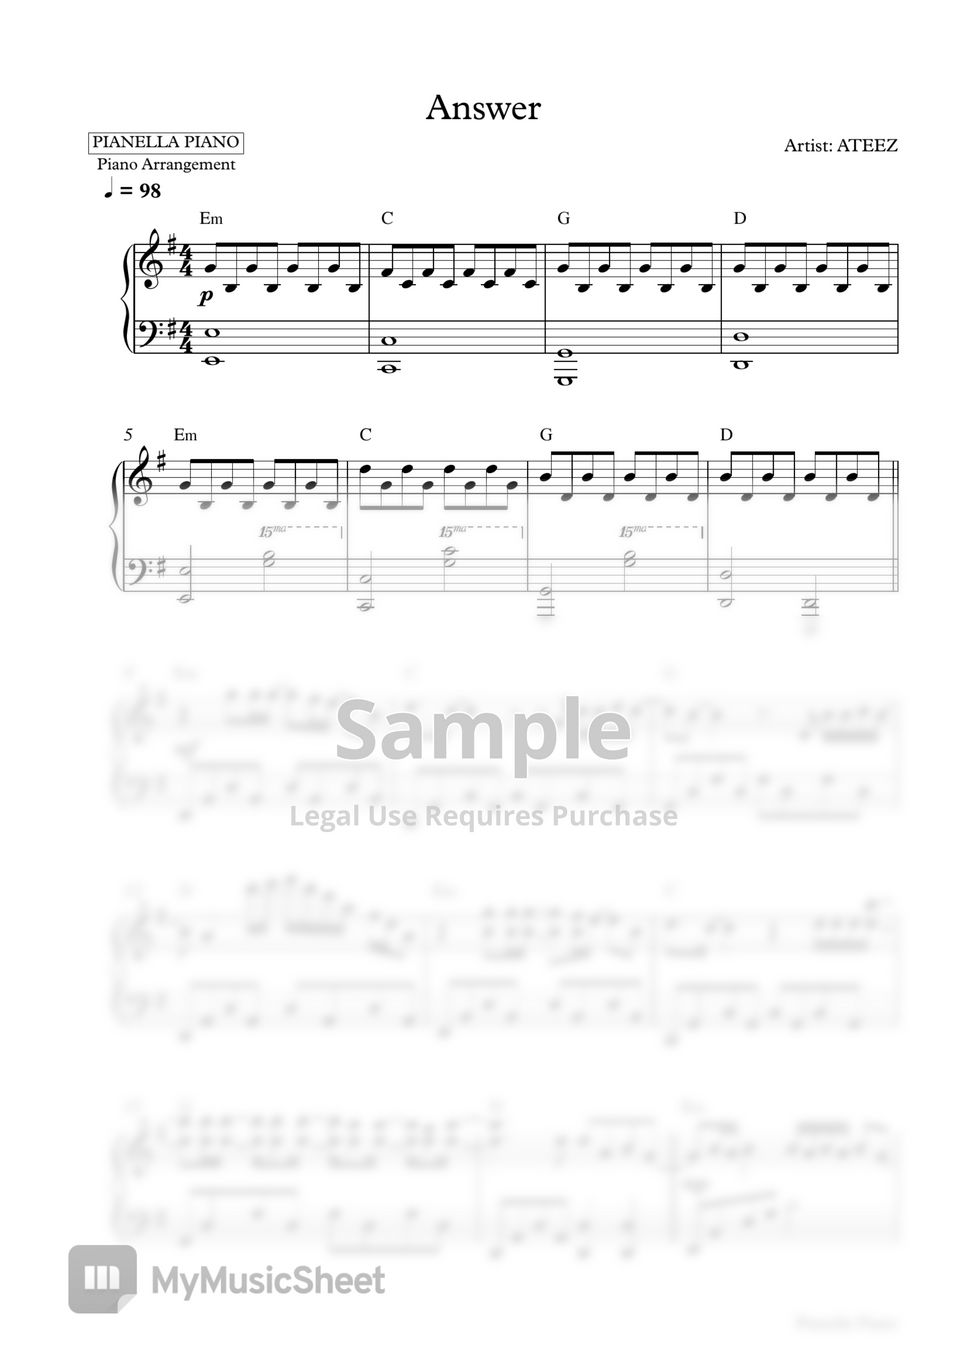 ATEEZ - Answer (Piano Sheet) by Pianella Piano